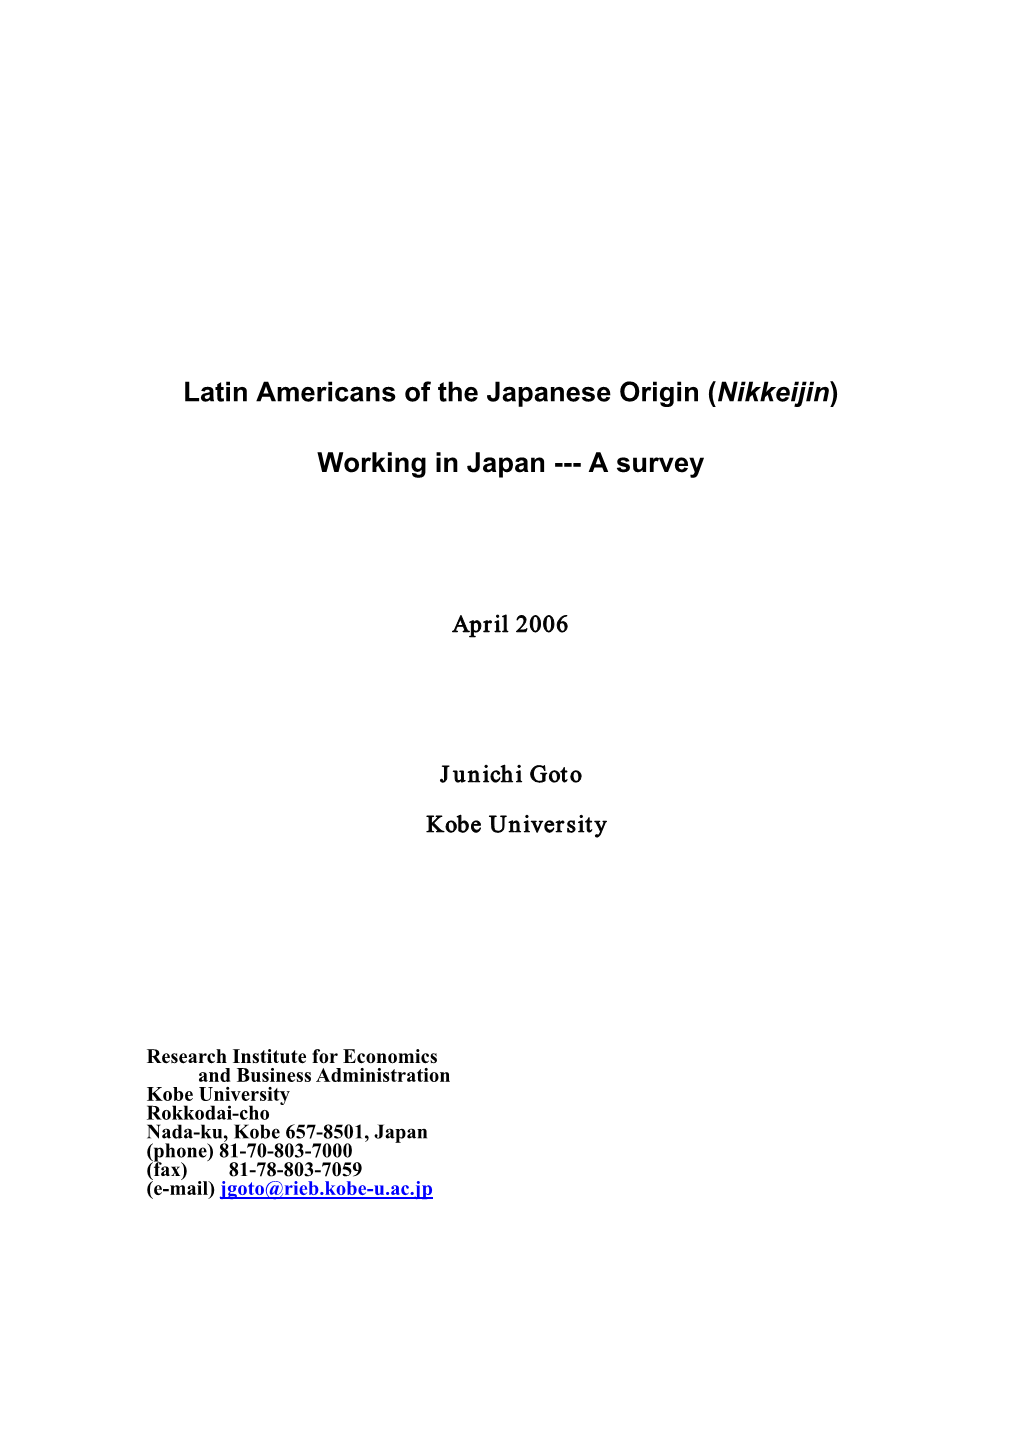 Latin Americans of the Japanese Origin (Nikkeijin) Working in Japan